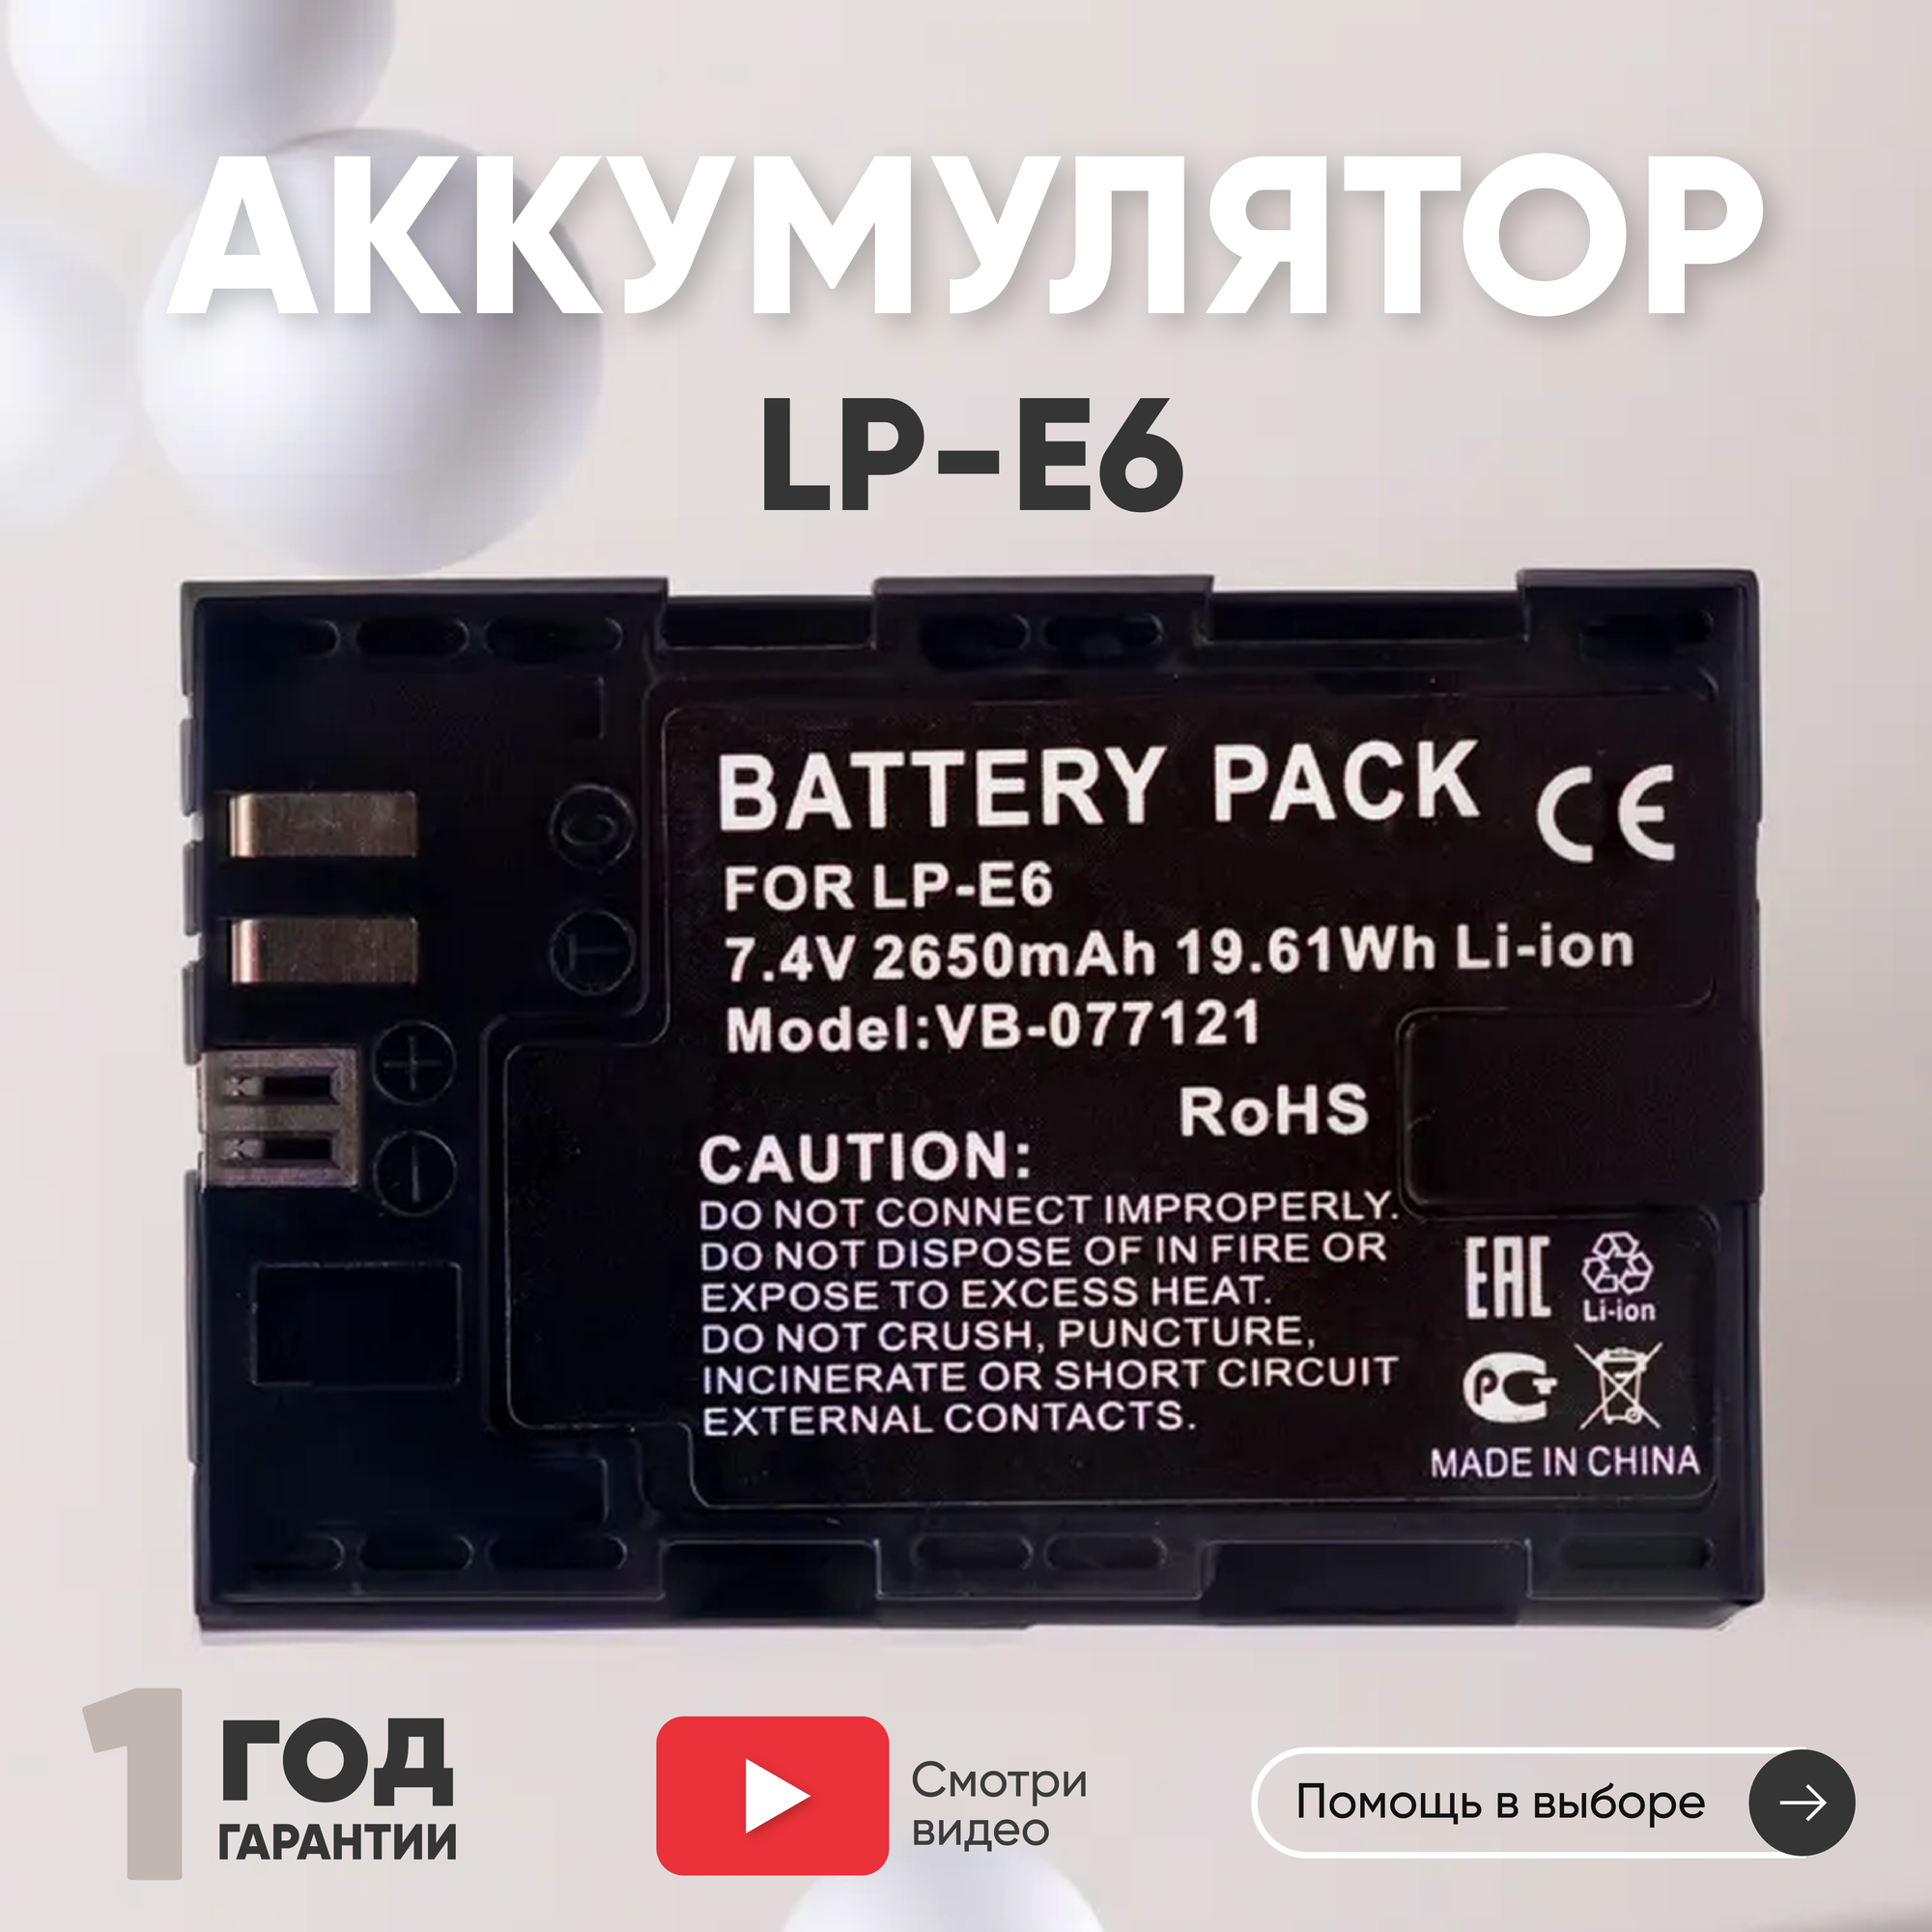 Аккумулятор (АКБ, аккумуляторная батарея) LP-E6 для фотоаппарата Canon EOS 5D Mark II, 7.4В, 1800мАч, Li-Ion